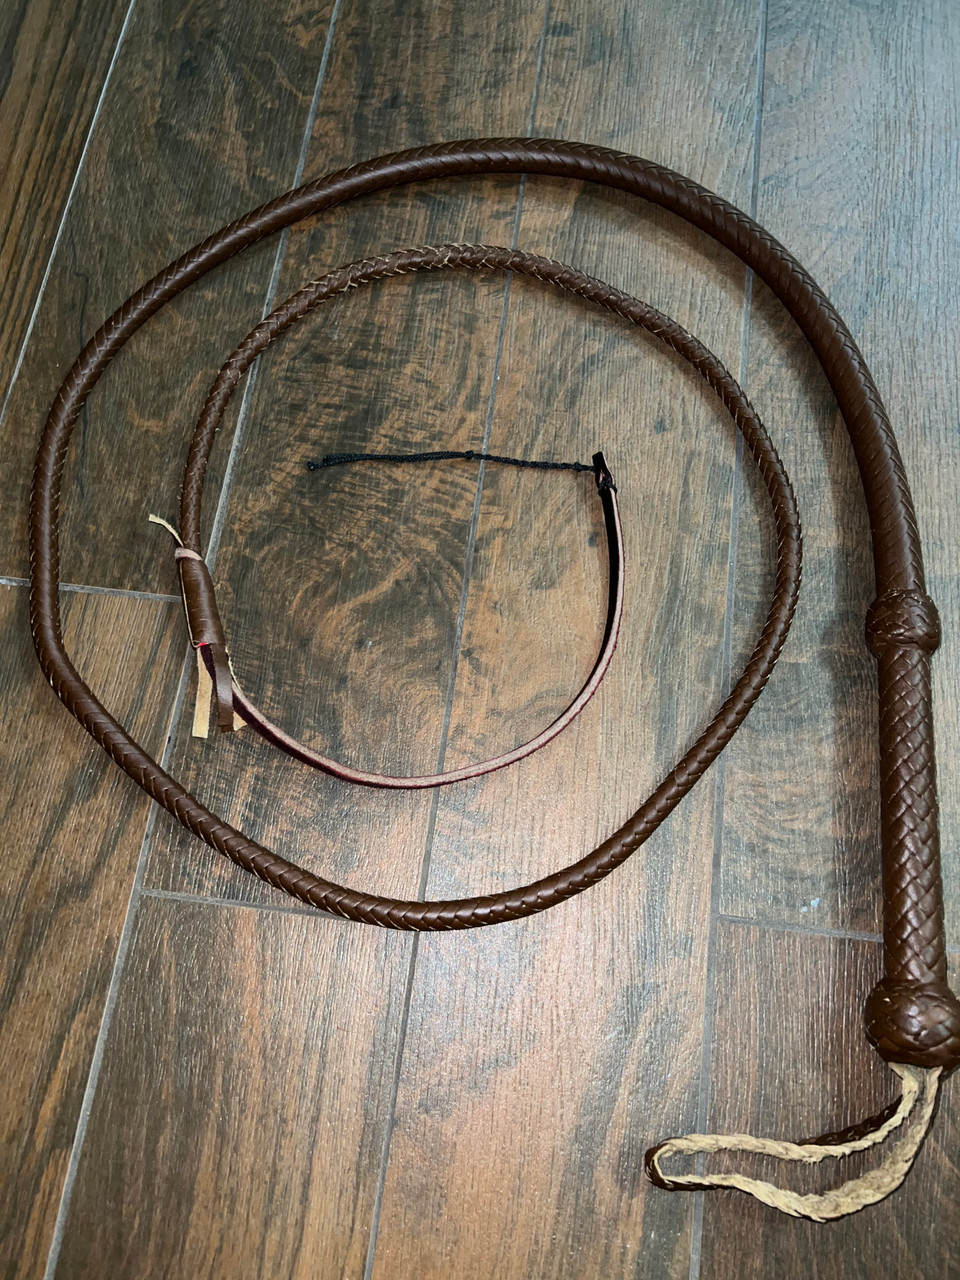 Bull Whip - Burgundy Colored Leather 12 Ply - 8ft Handmade